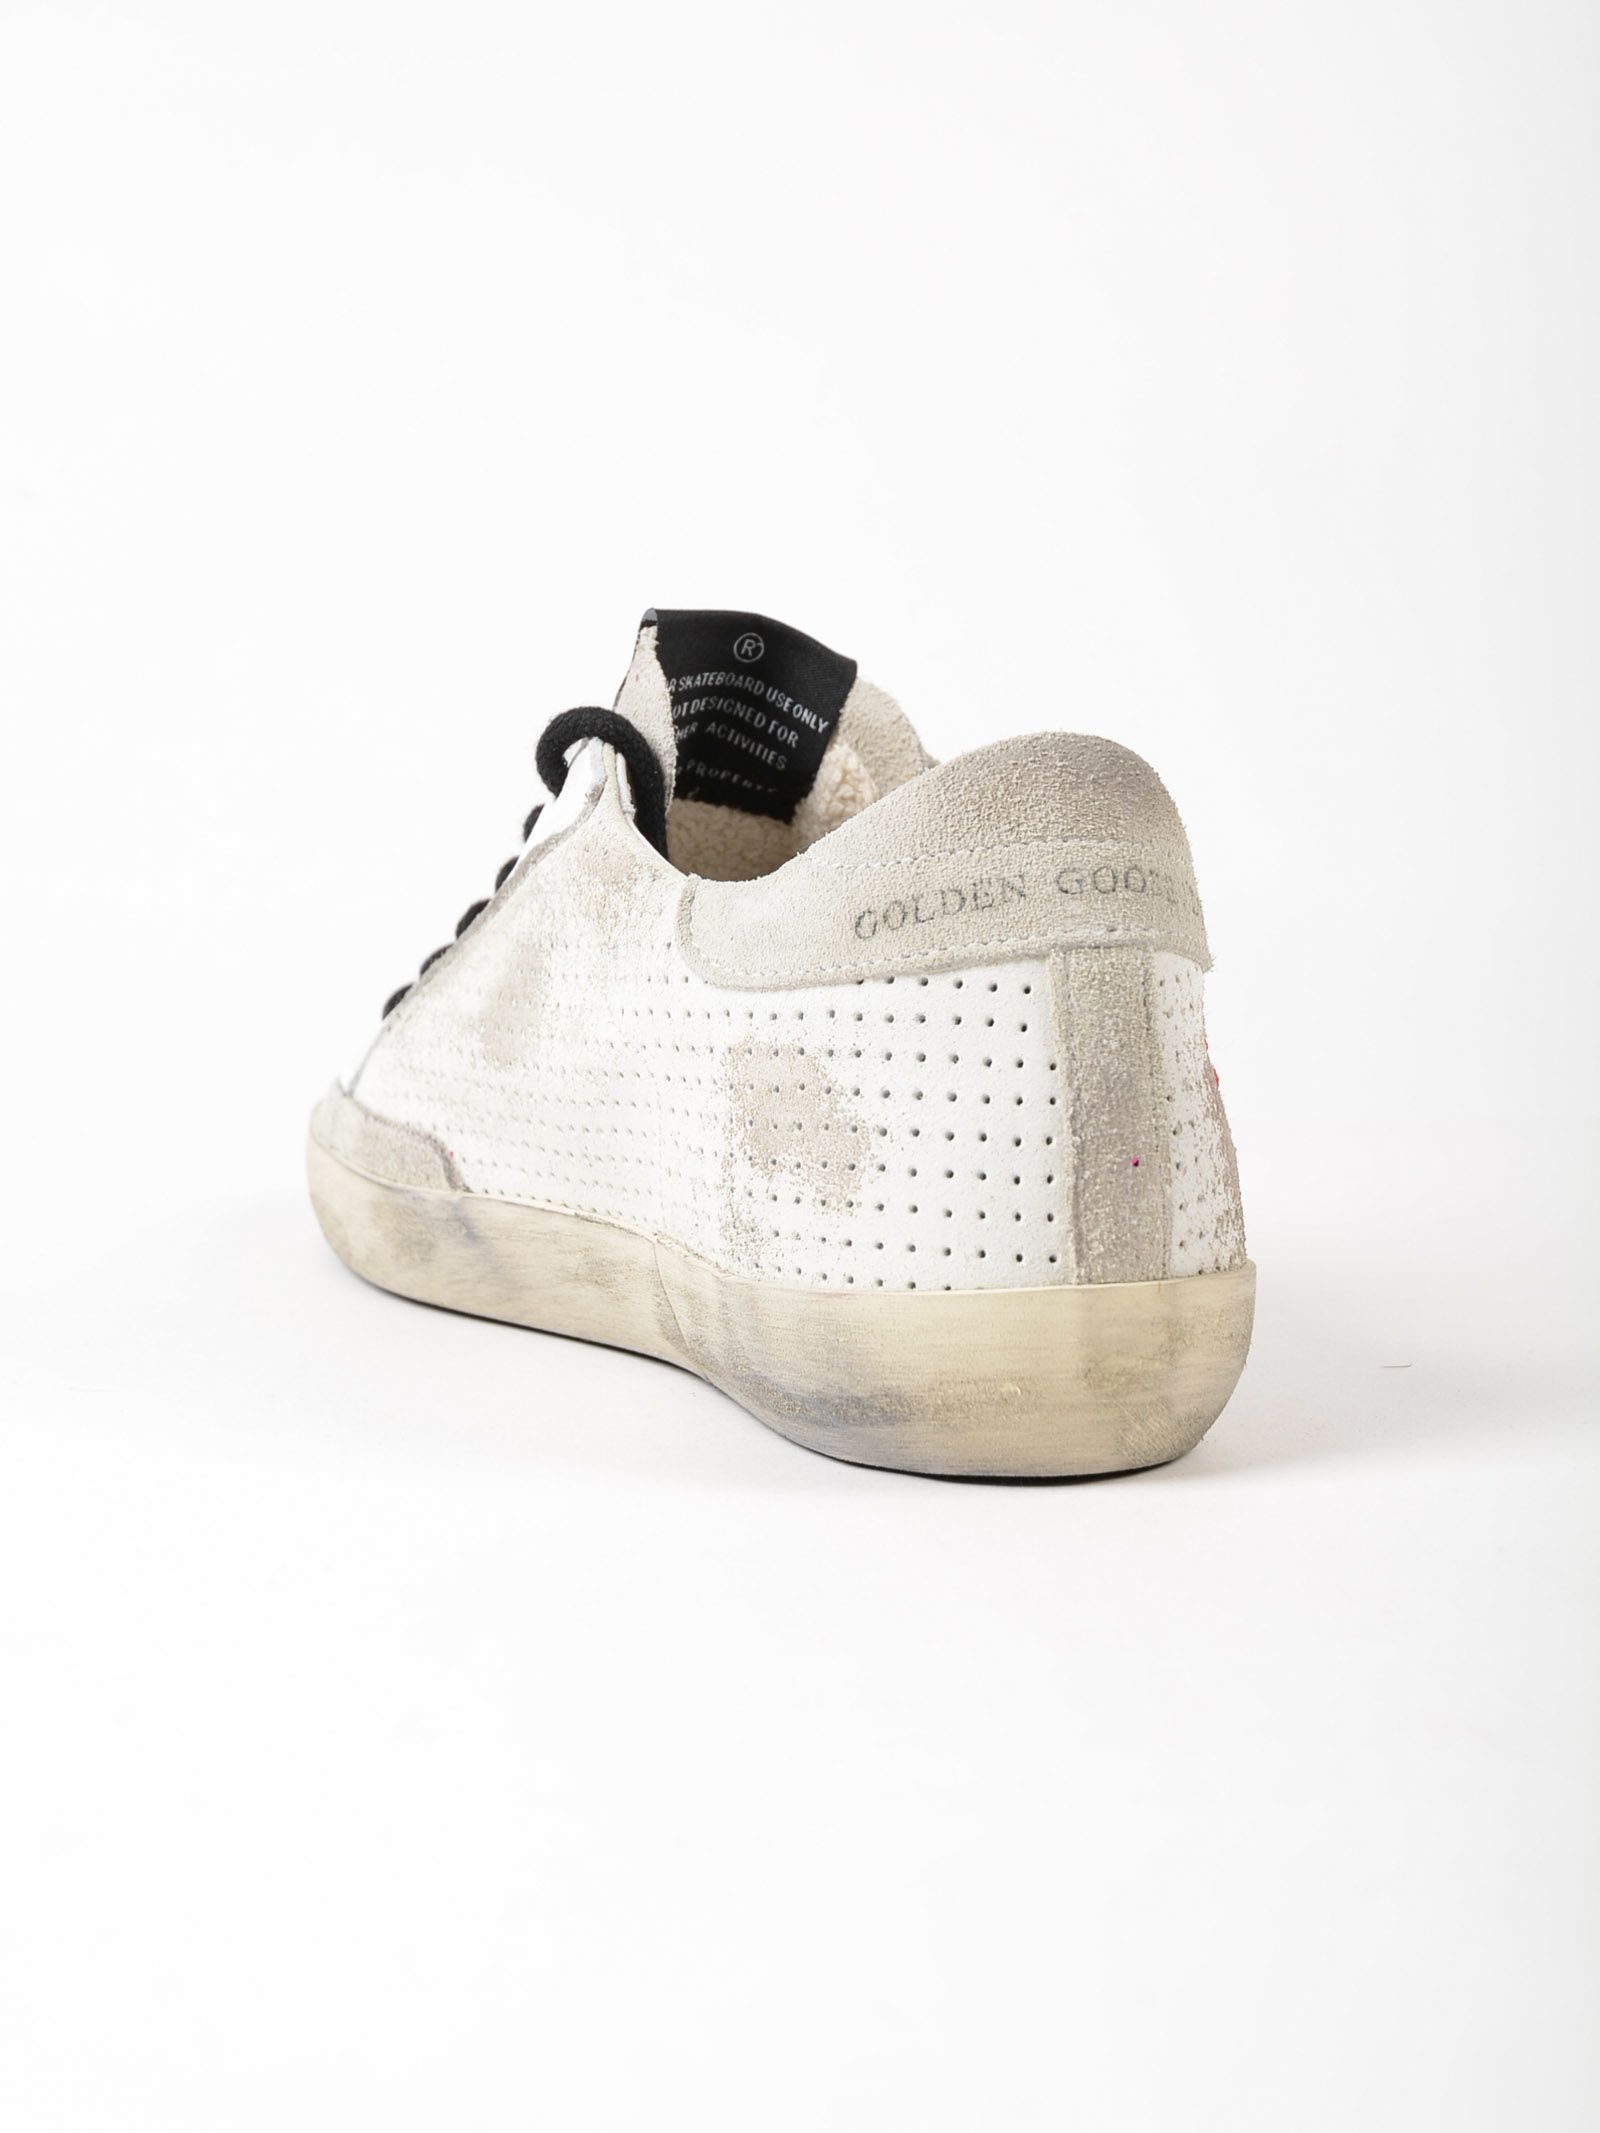 NO BOX*Cheap Adidas Superstar II 2 Men's Shoes Shell Toe 